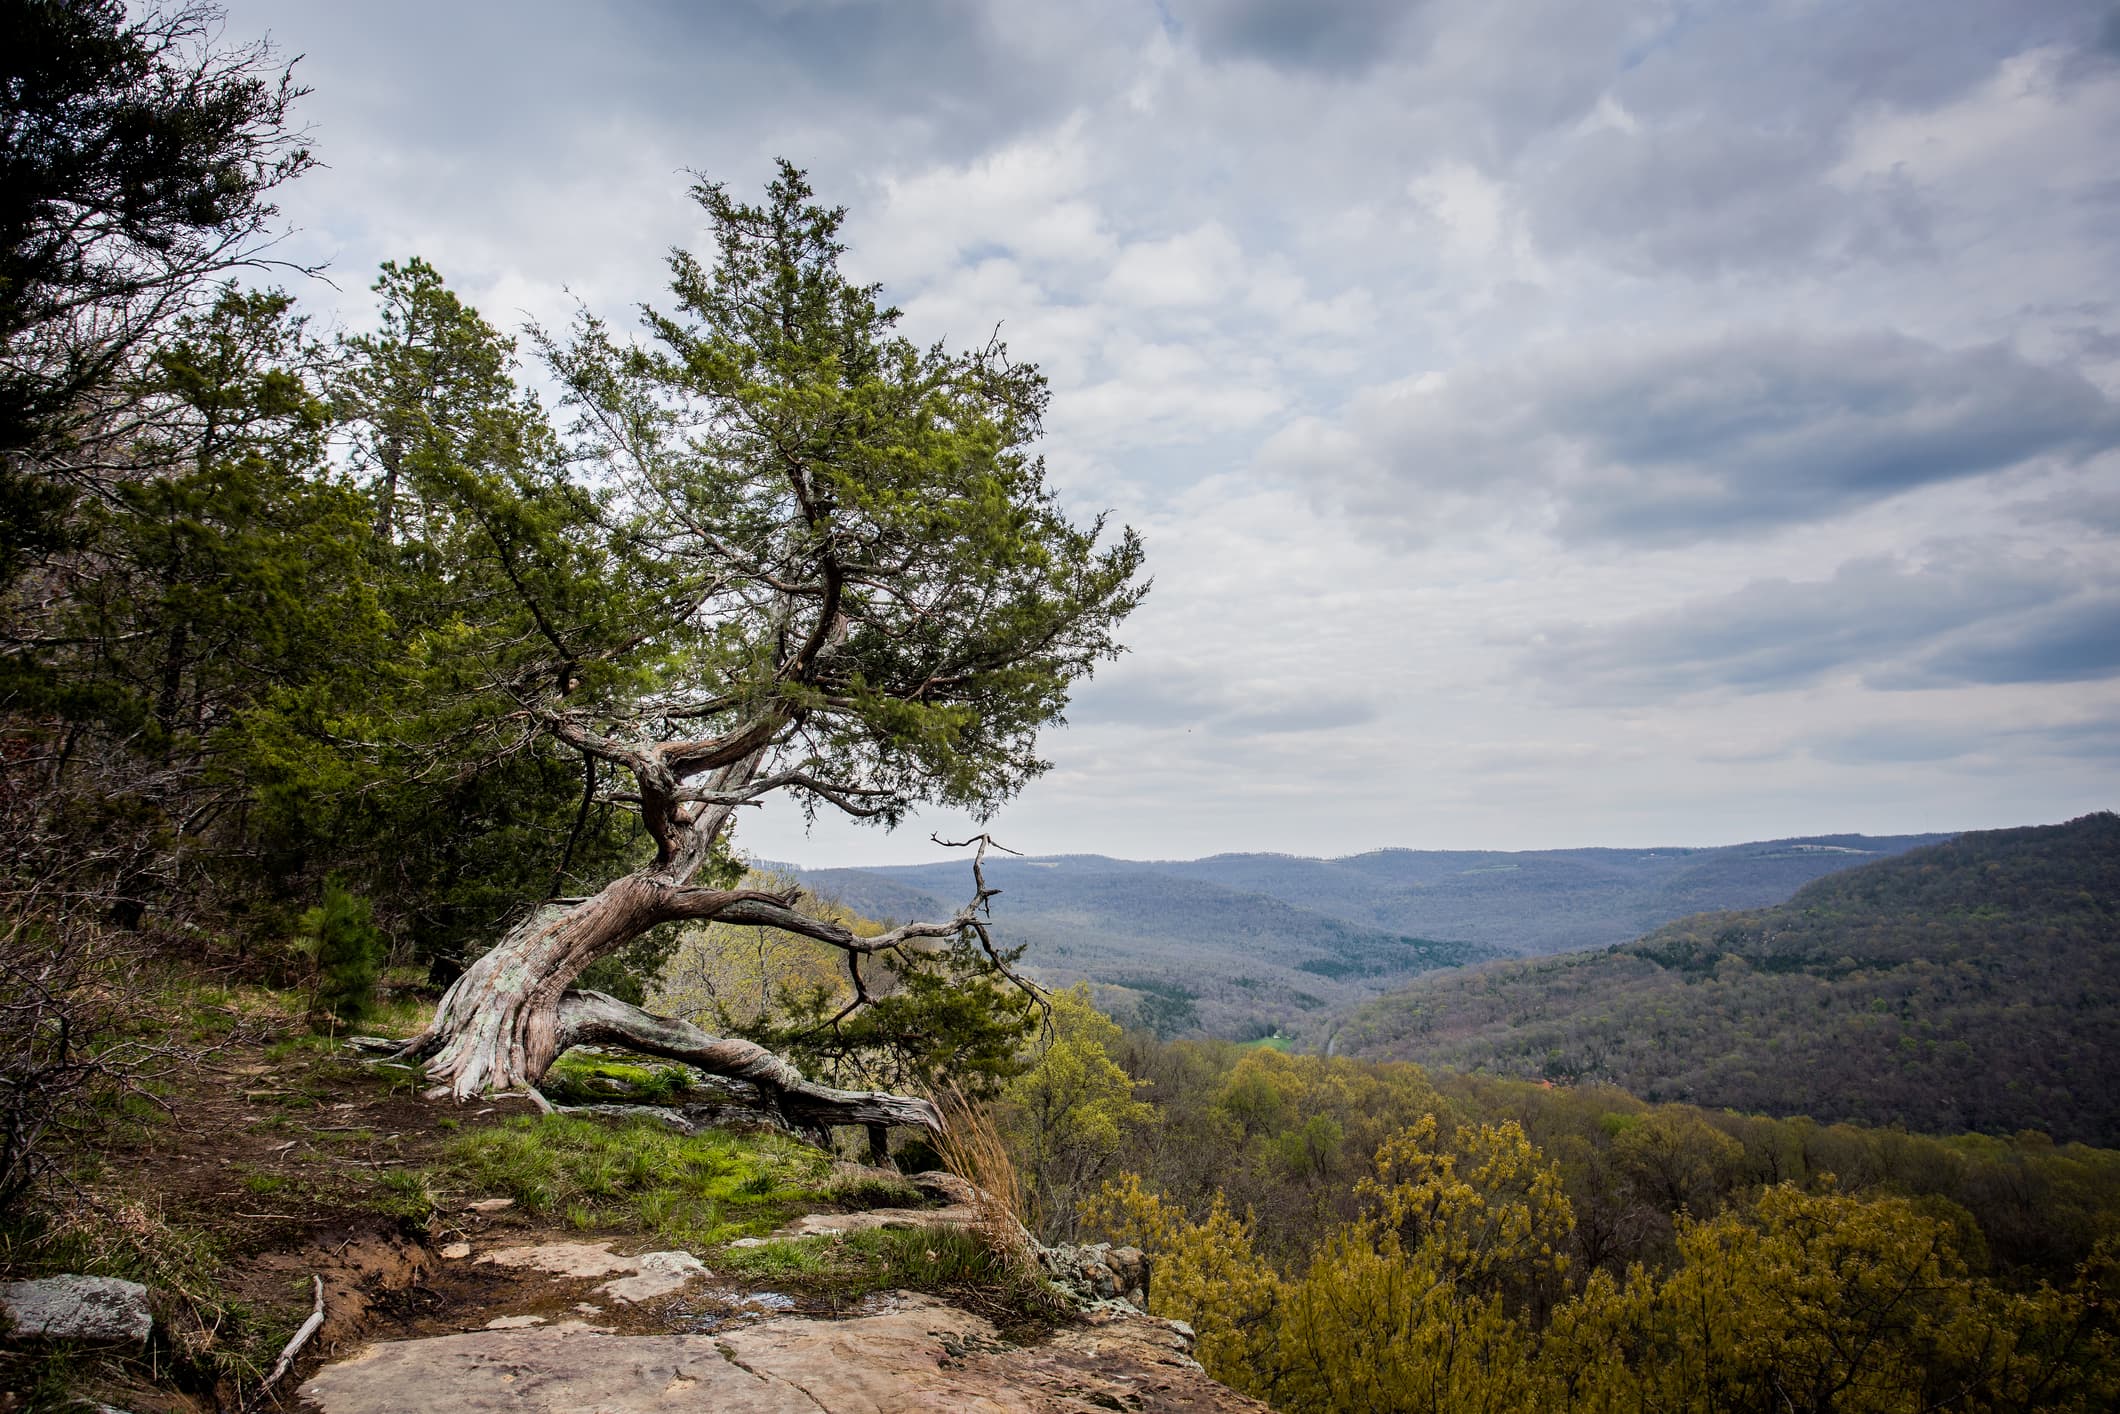 A popular overlook at Ozark National Forest, Arkansas.